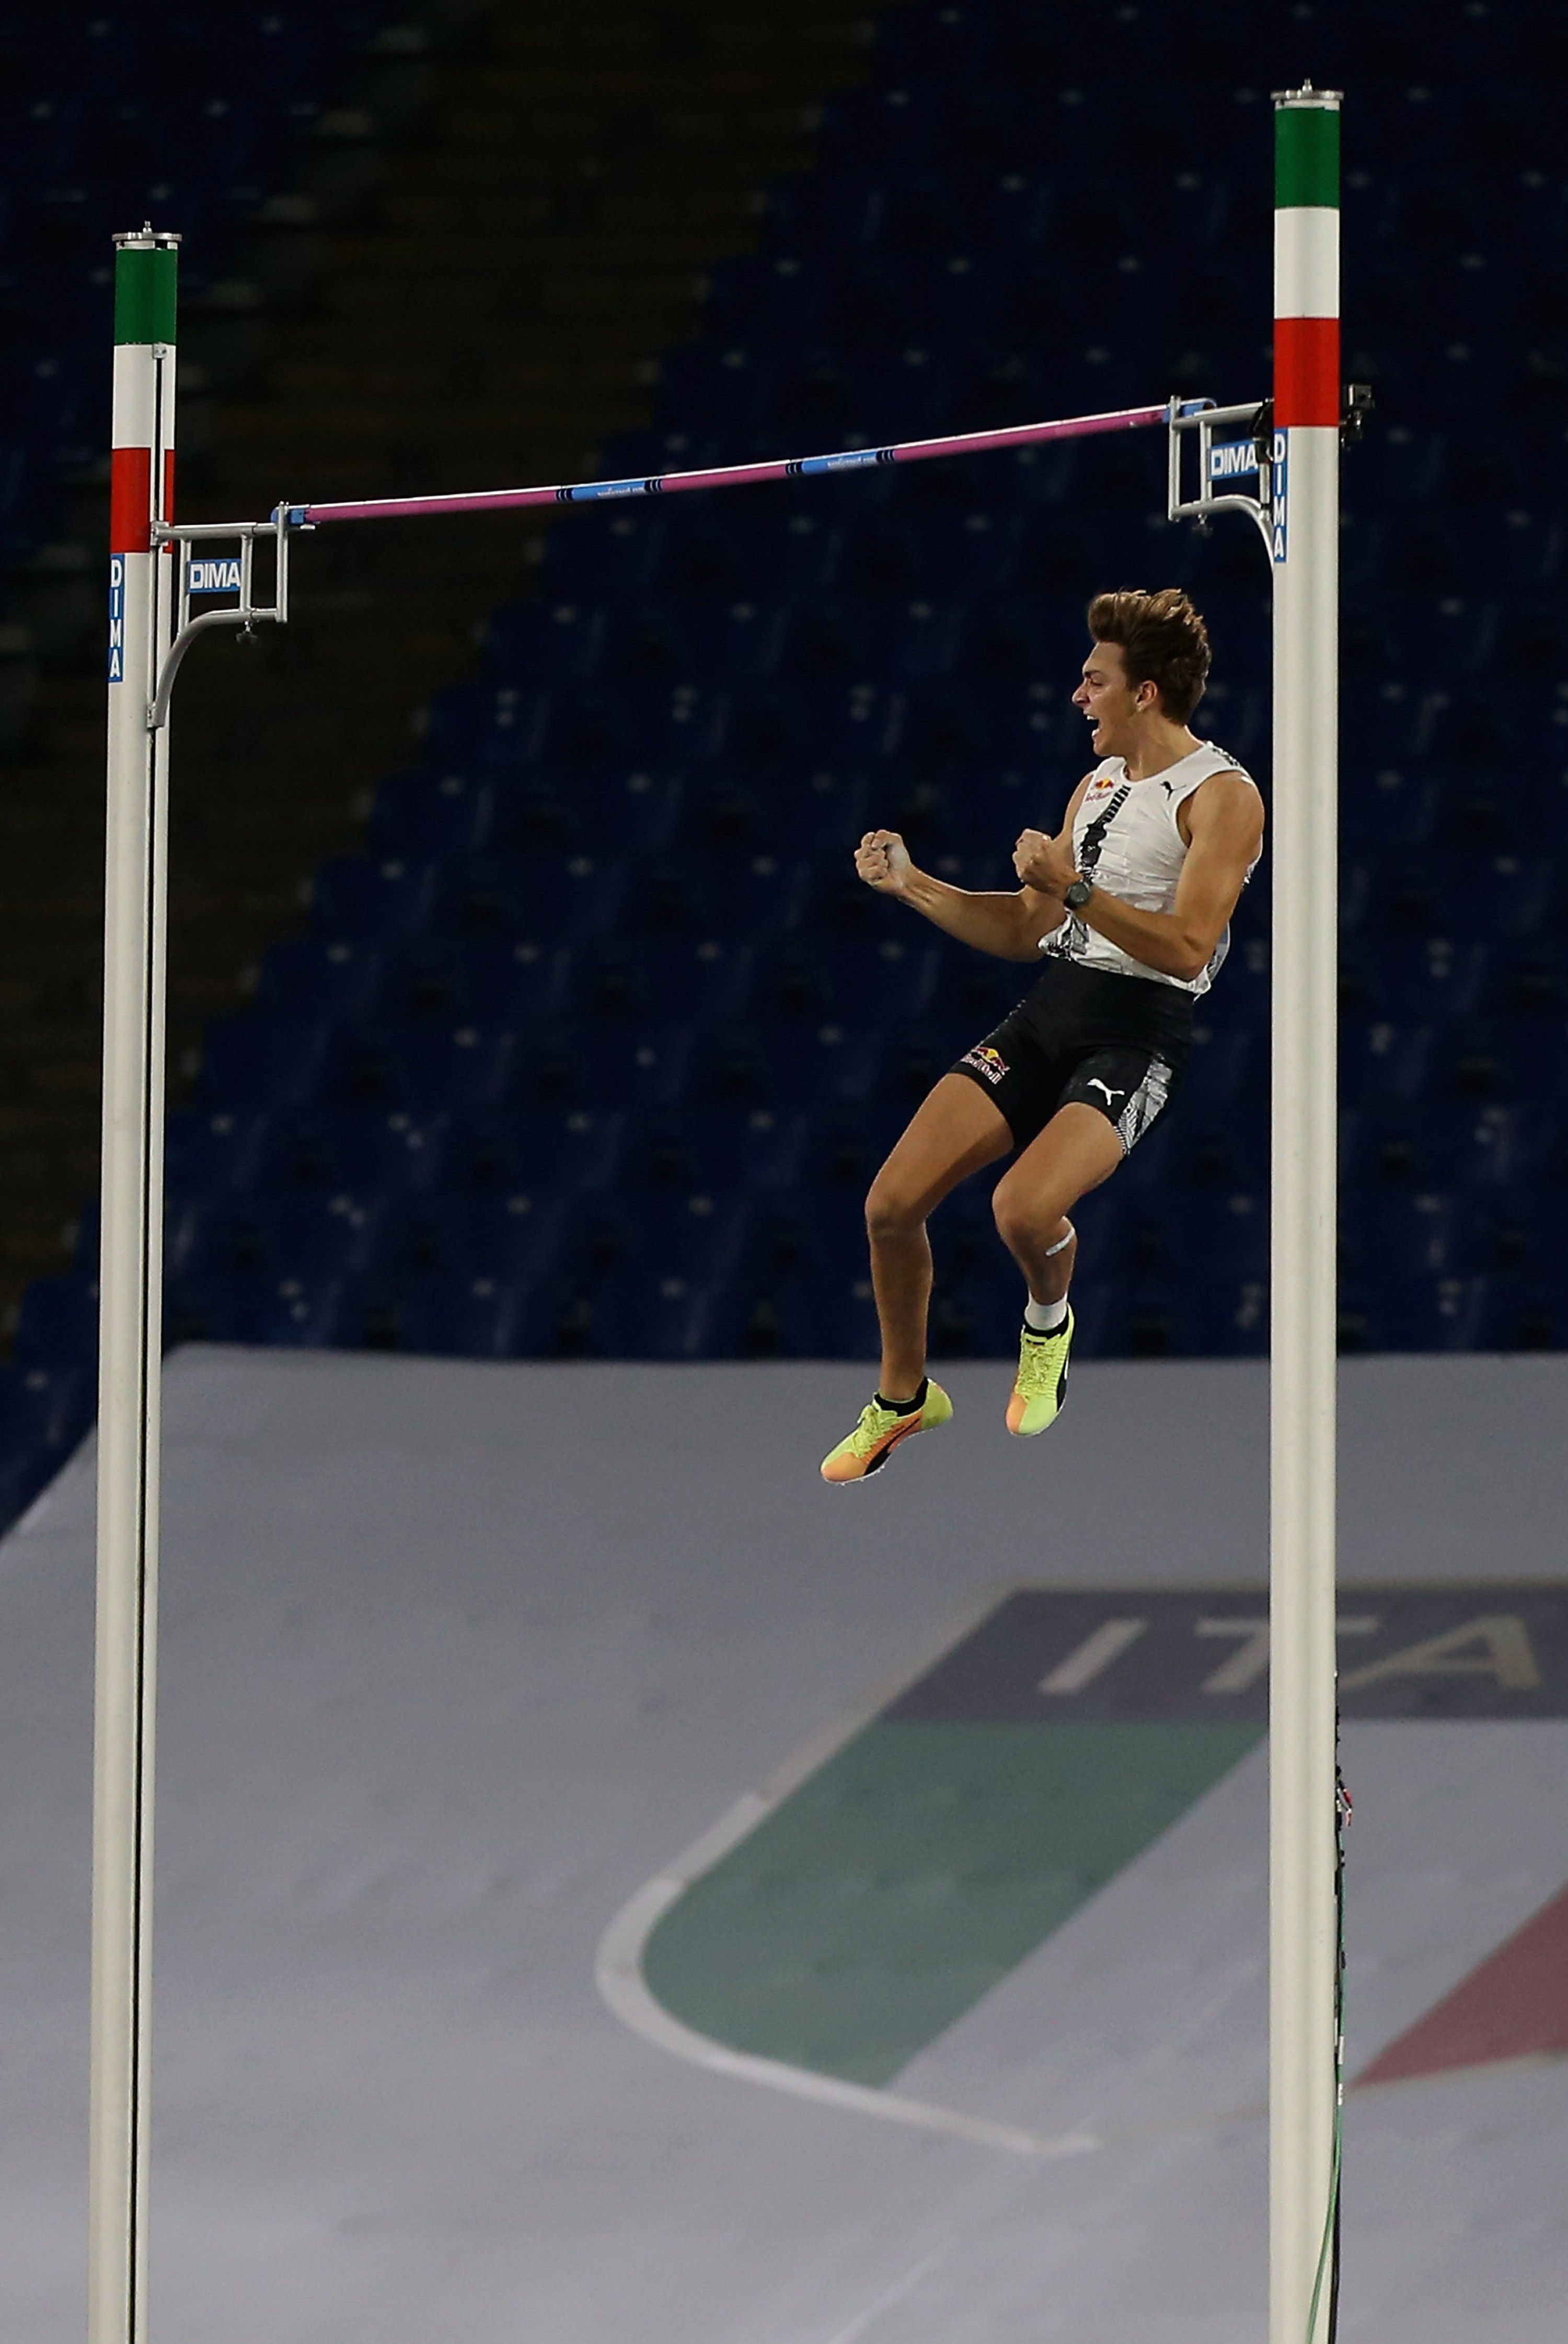 Mondo Duplantis World Record - 20-Year-Old Sets New Pole Vault